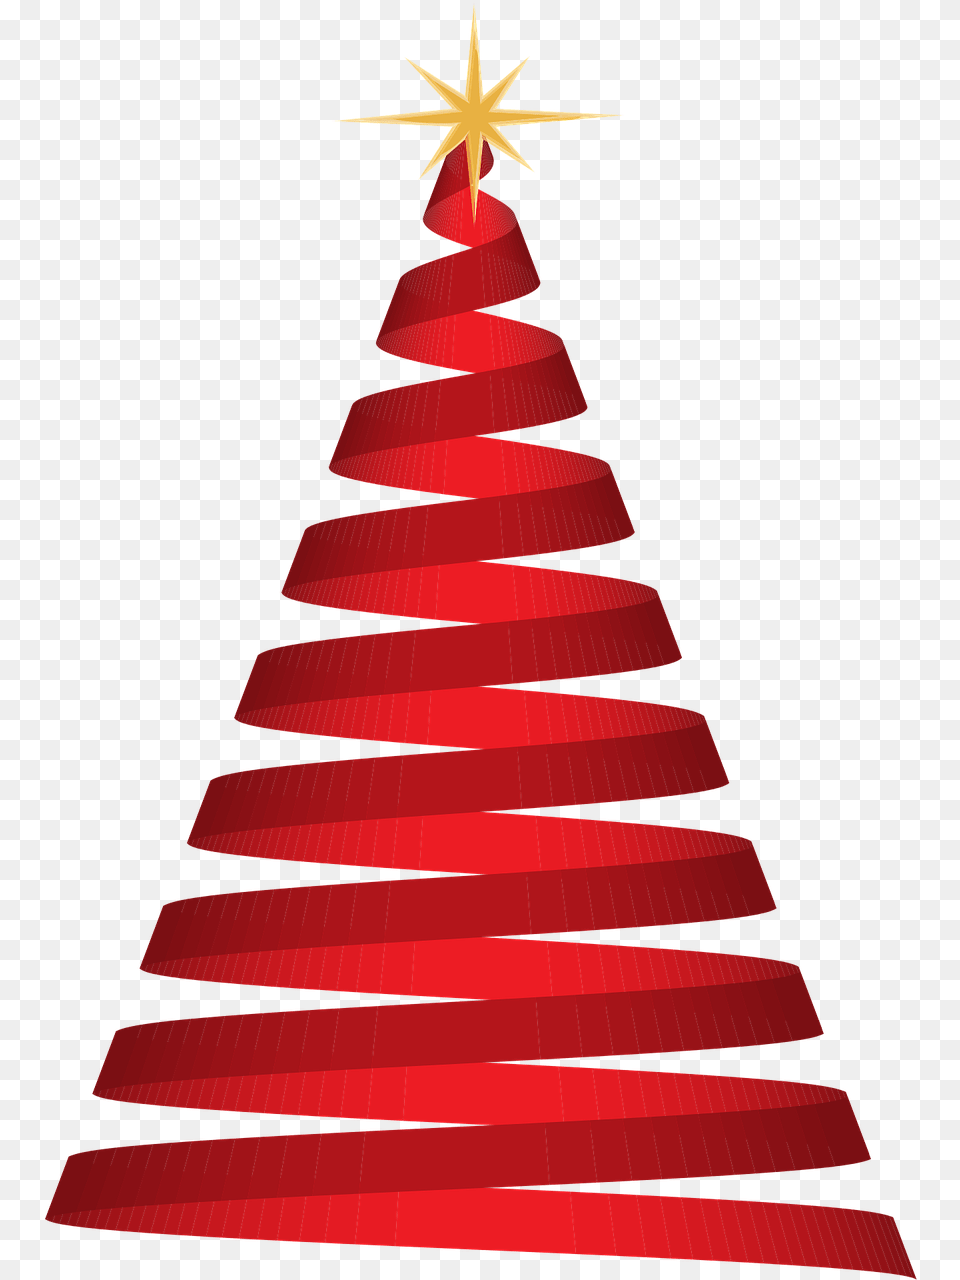 Christmas Tree Red Vector Graphic On Pixabay Arvore De Natal De Fita, Christmas Decorations, Festival Free Transparent Png